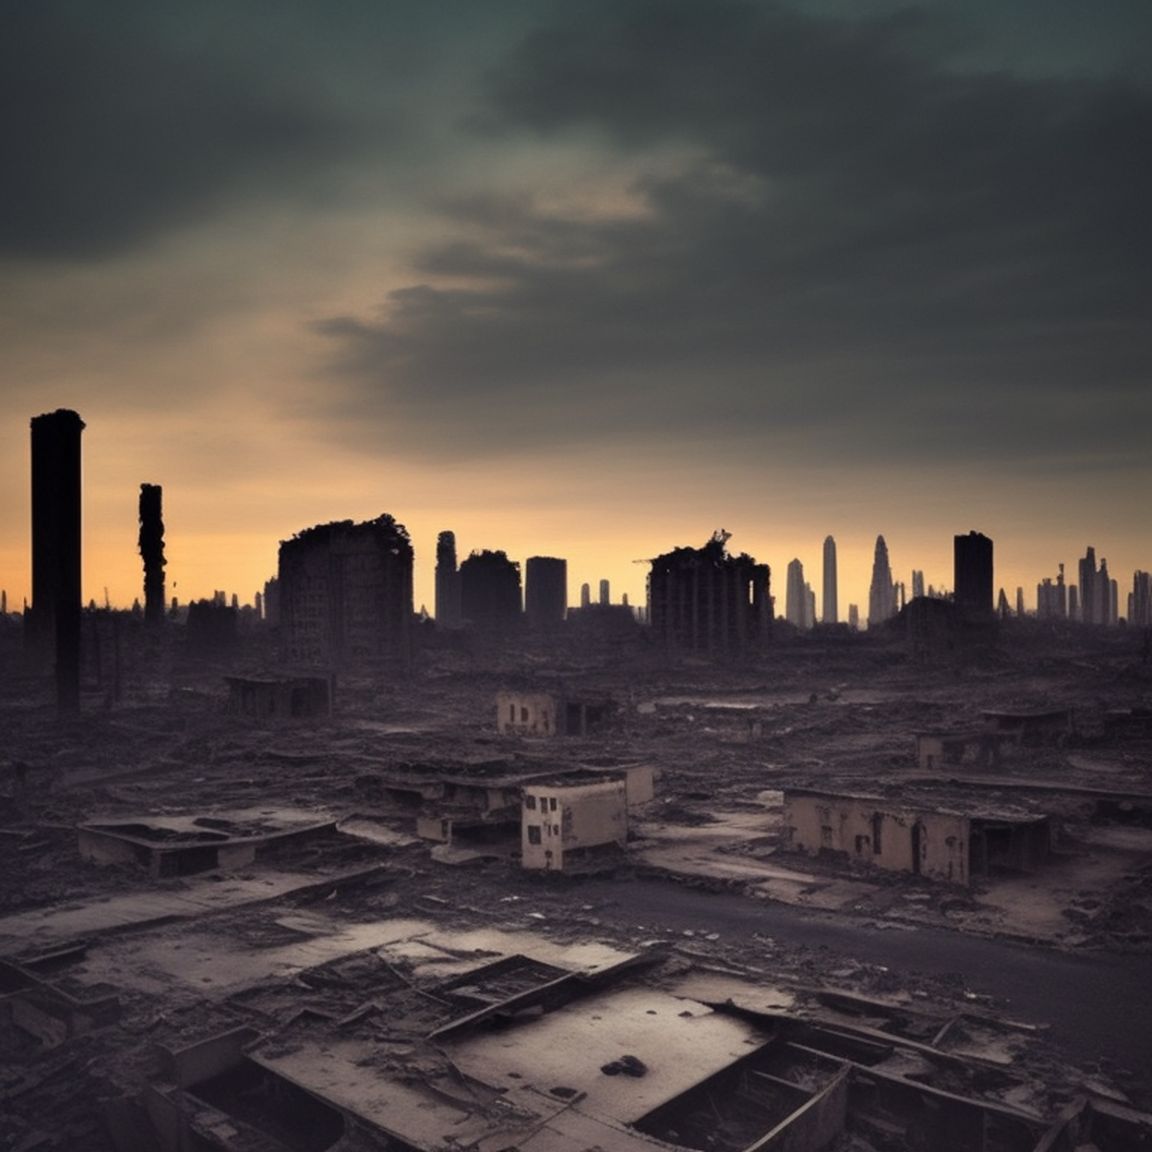 MrHmuriy: Desolate metropolis at dusk.